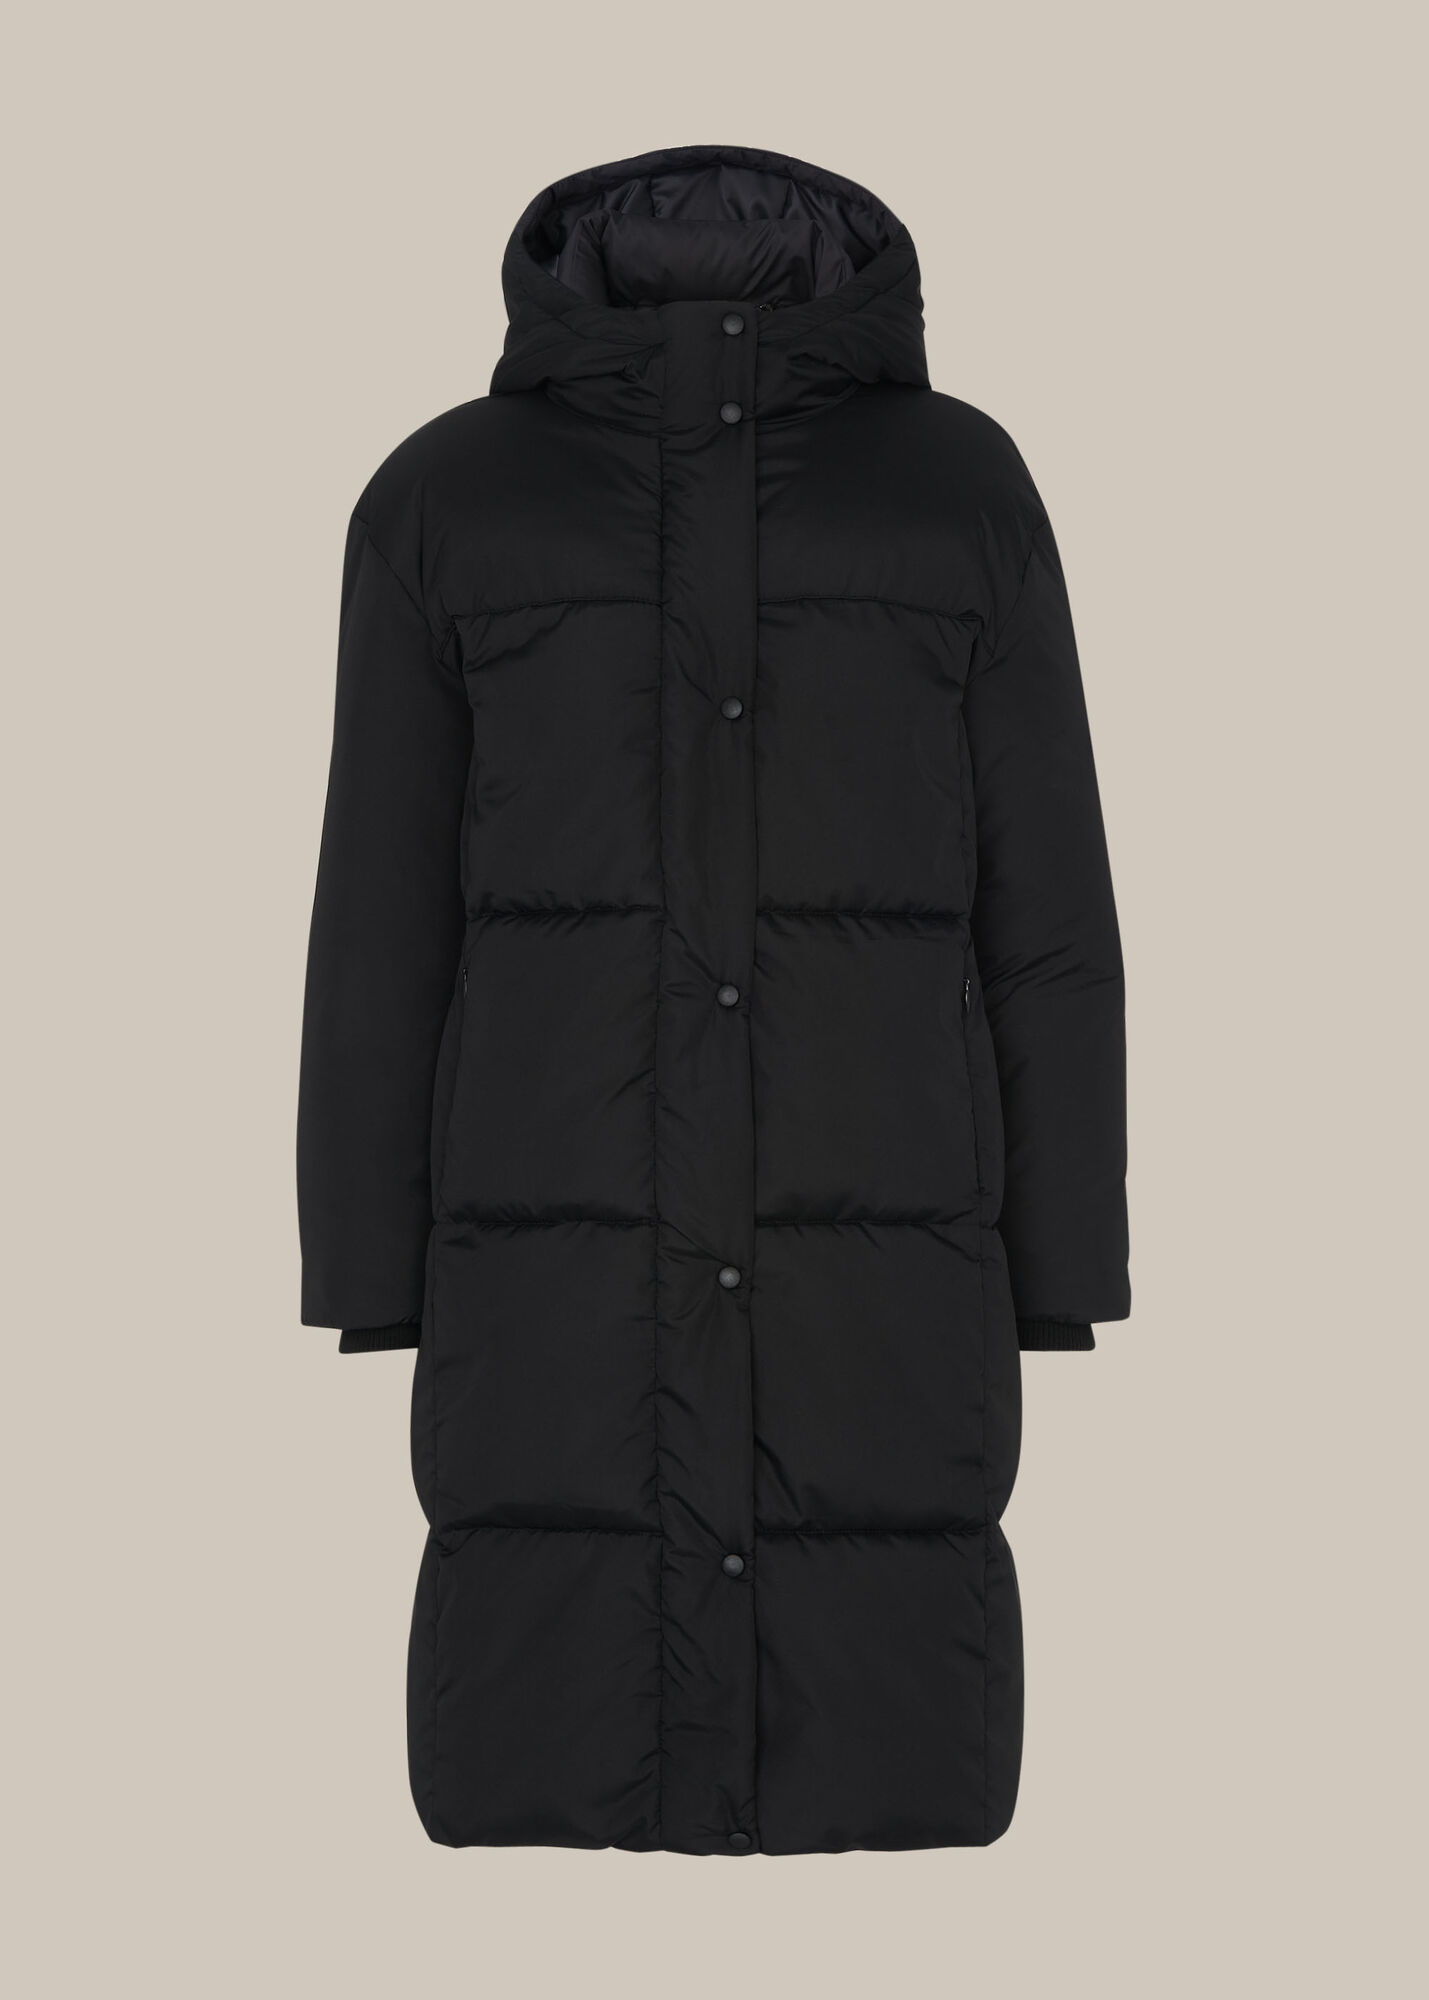 Black Hooded Puffer Jacket | WHISTLES